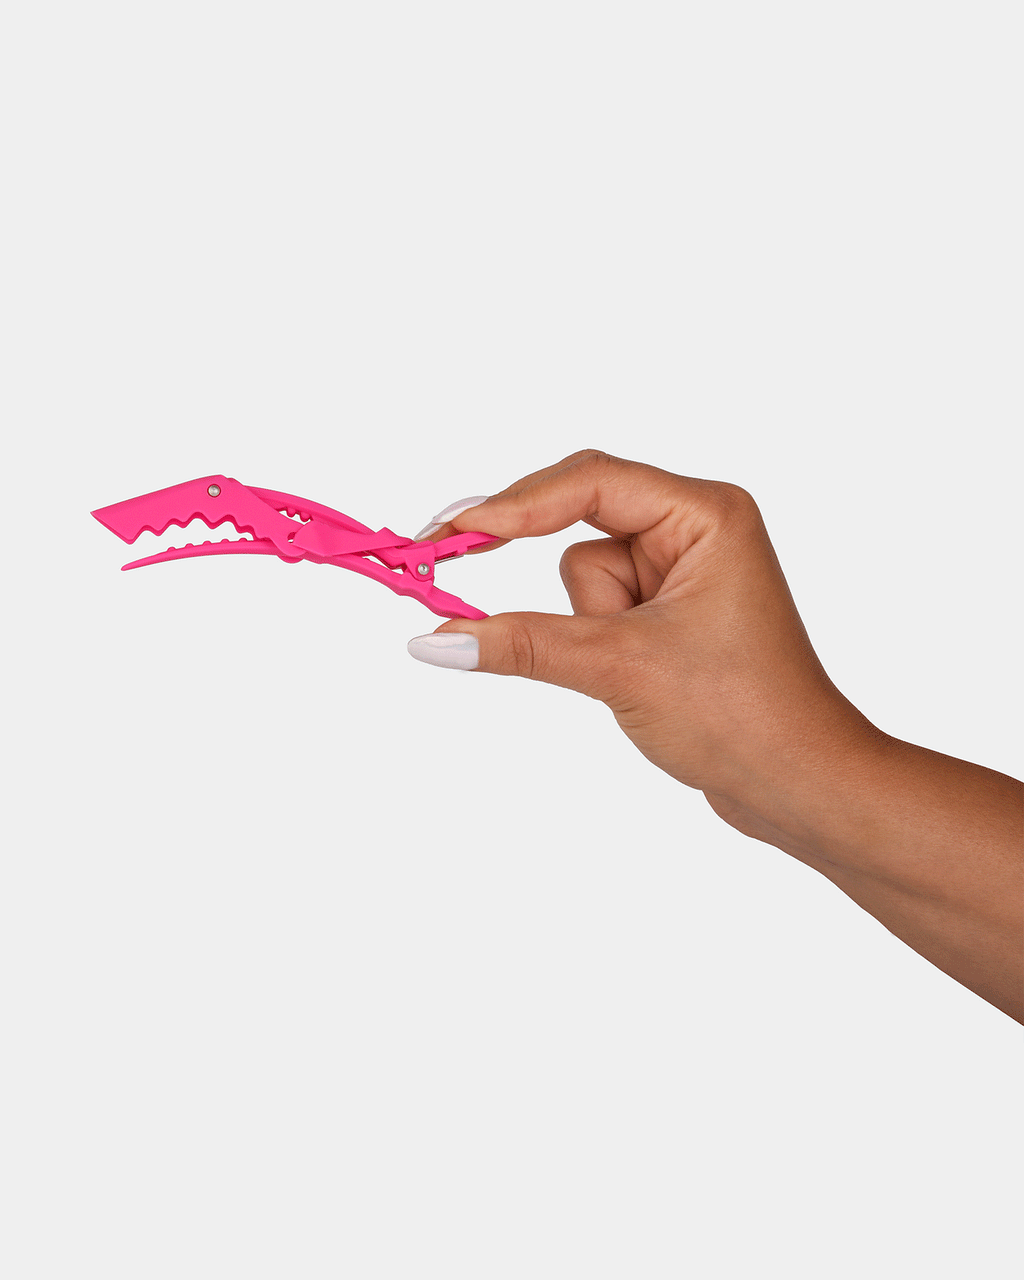 Framar Gator Grips Pink Hair Clips for Styling, Hair Clips for Women